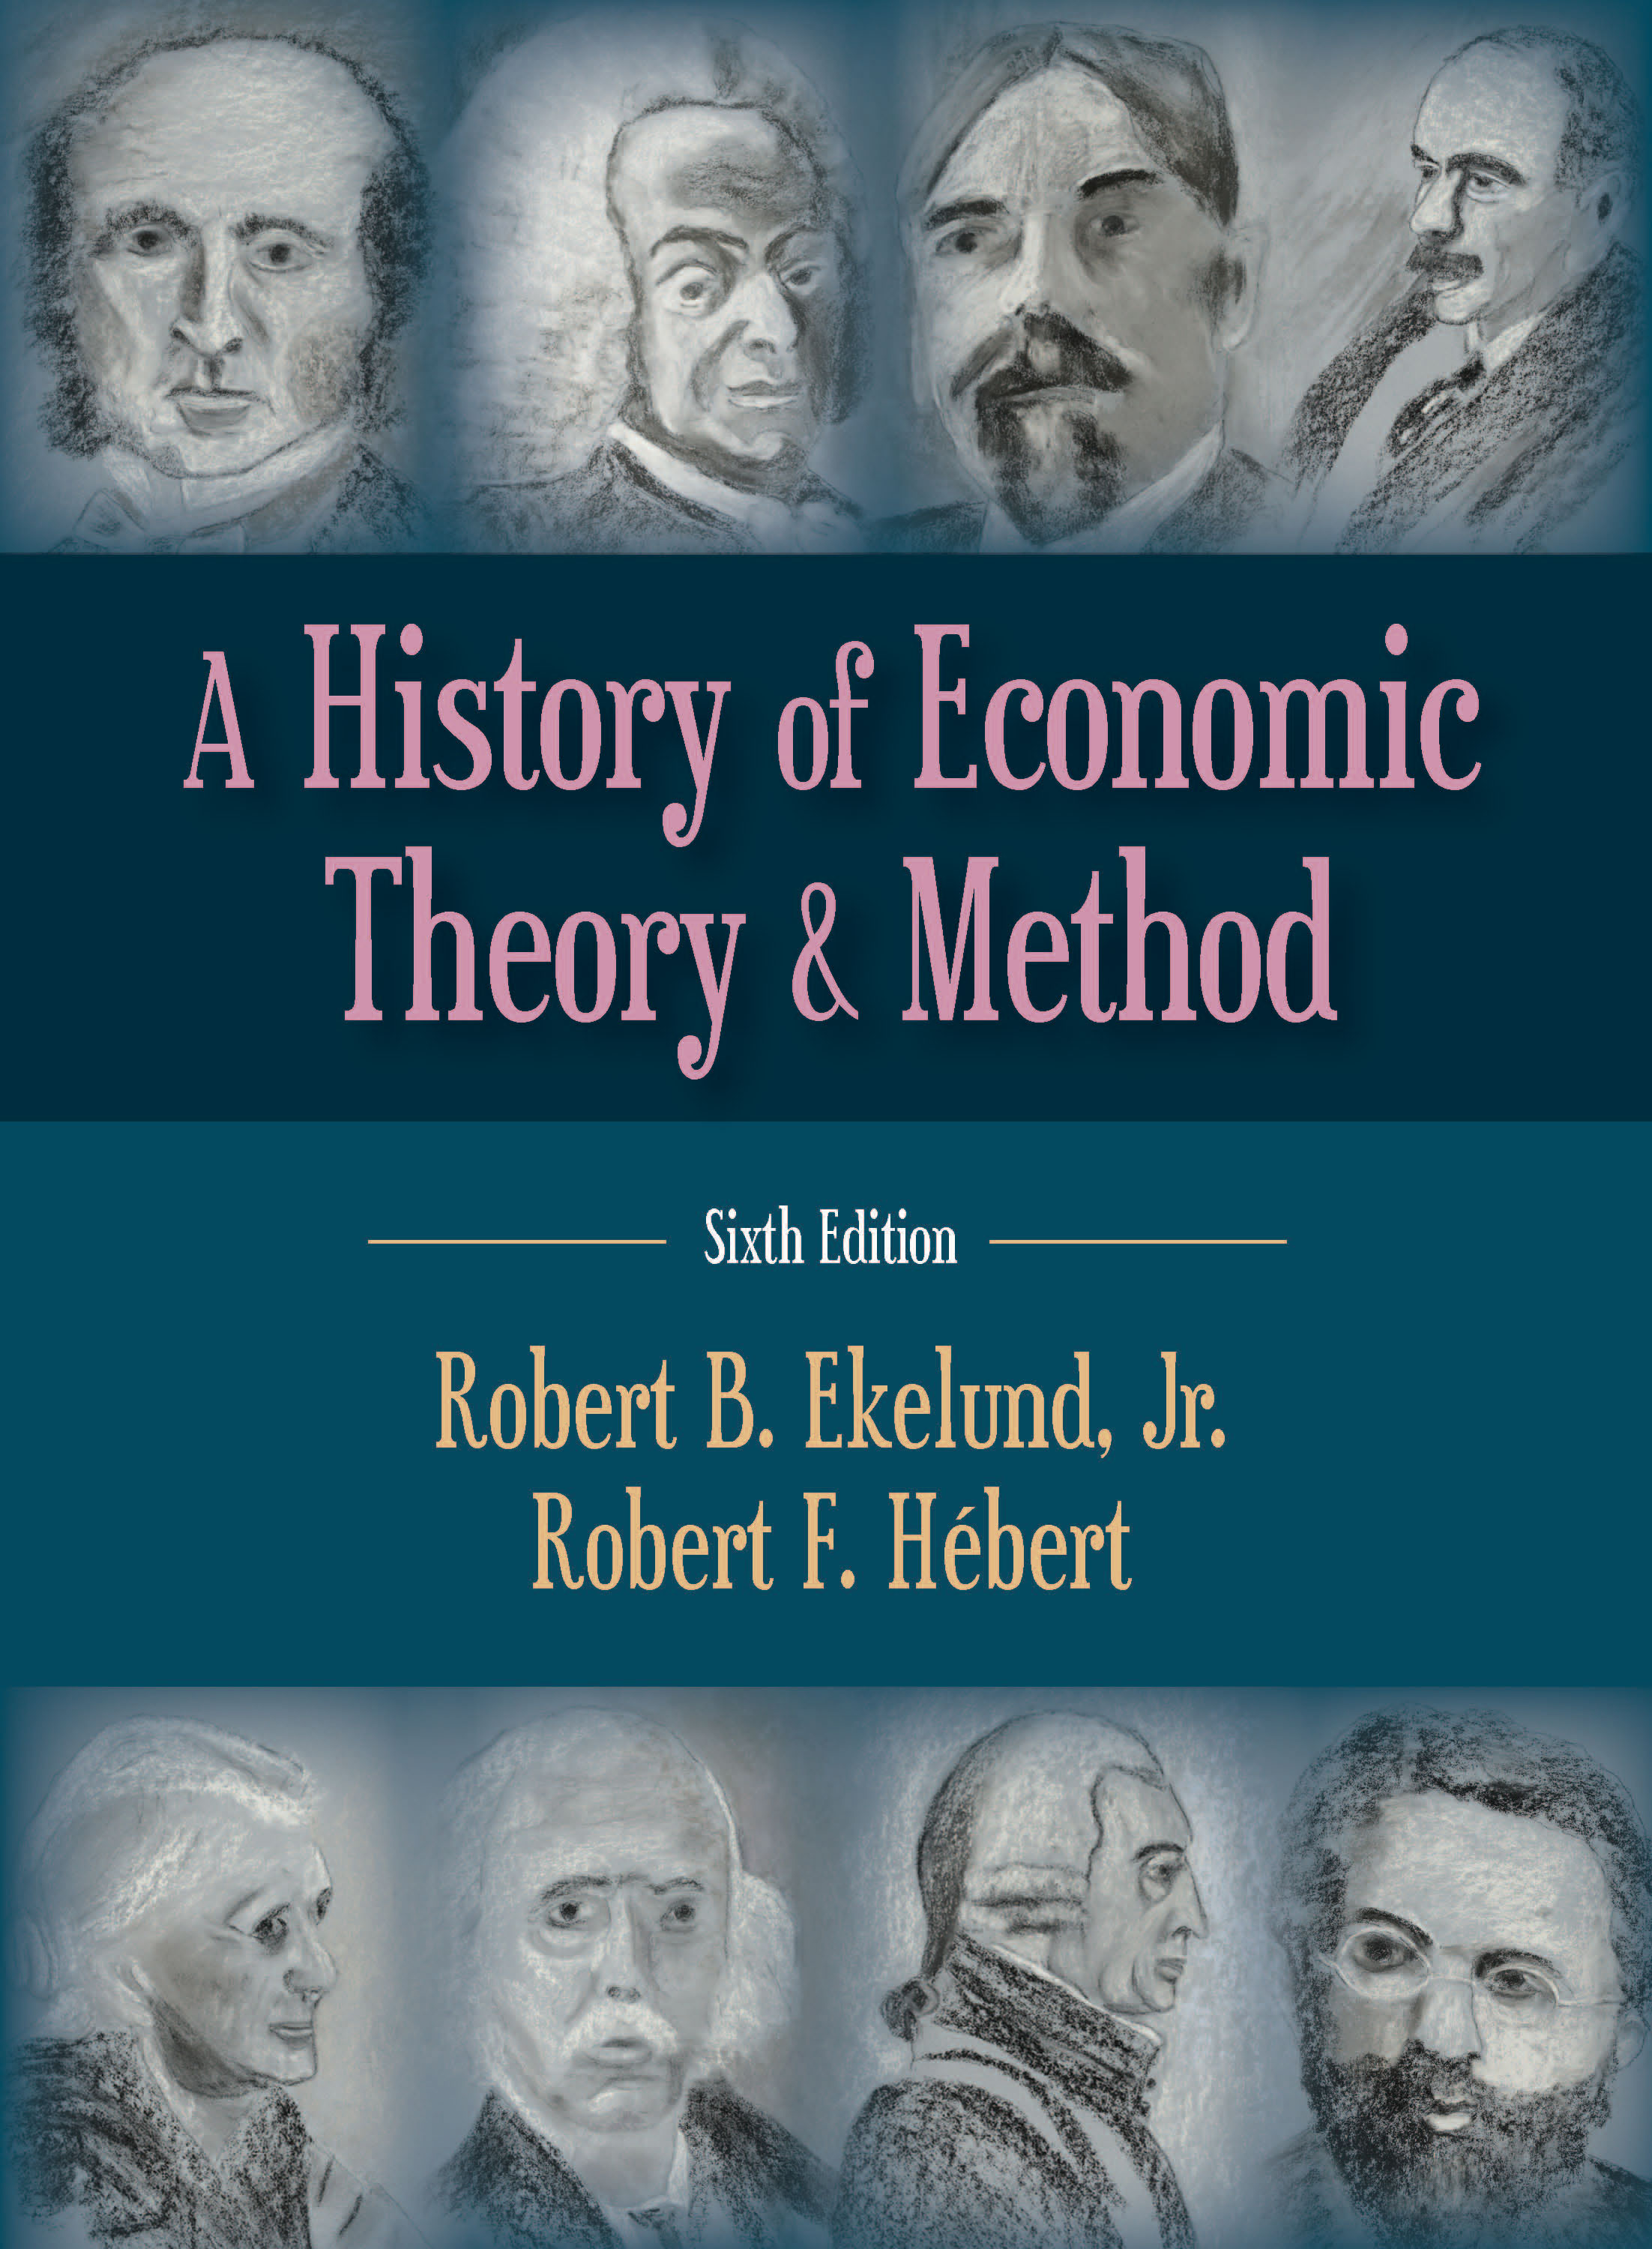 A History of Economic Theory and Method: Sixth Edition by Robert B. Ekelund, Jr., Robert F. Hebert